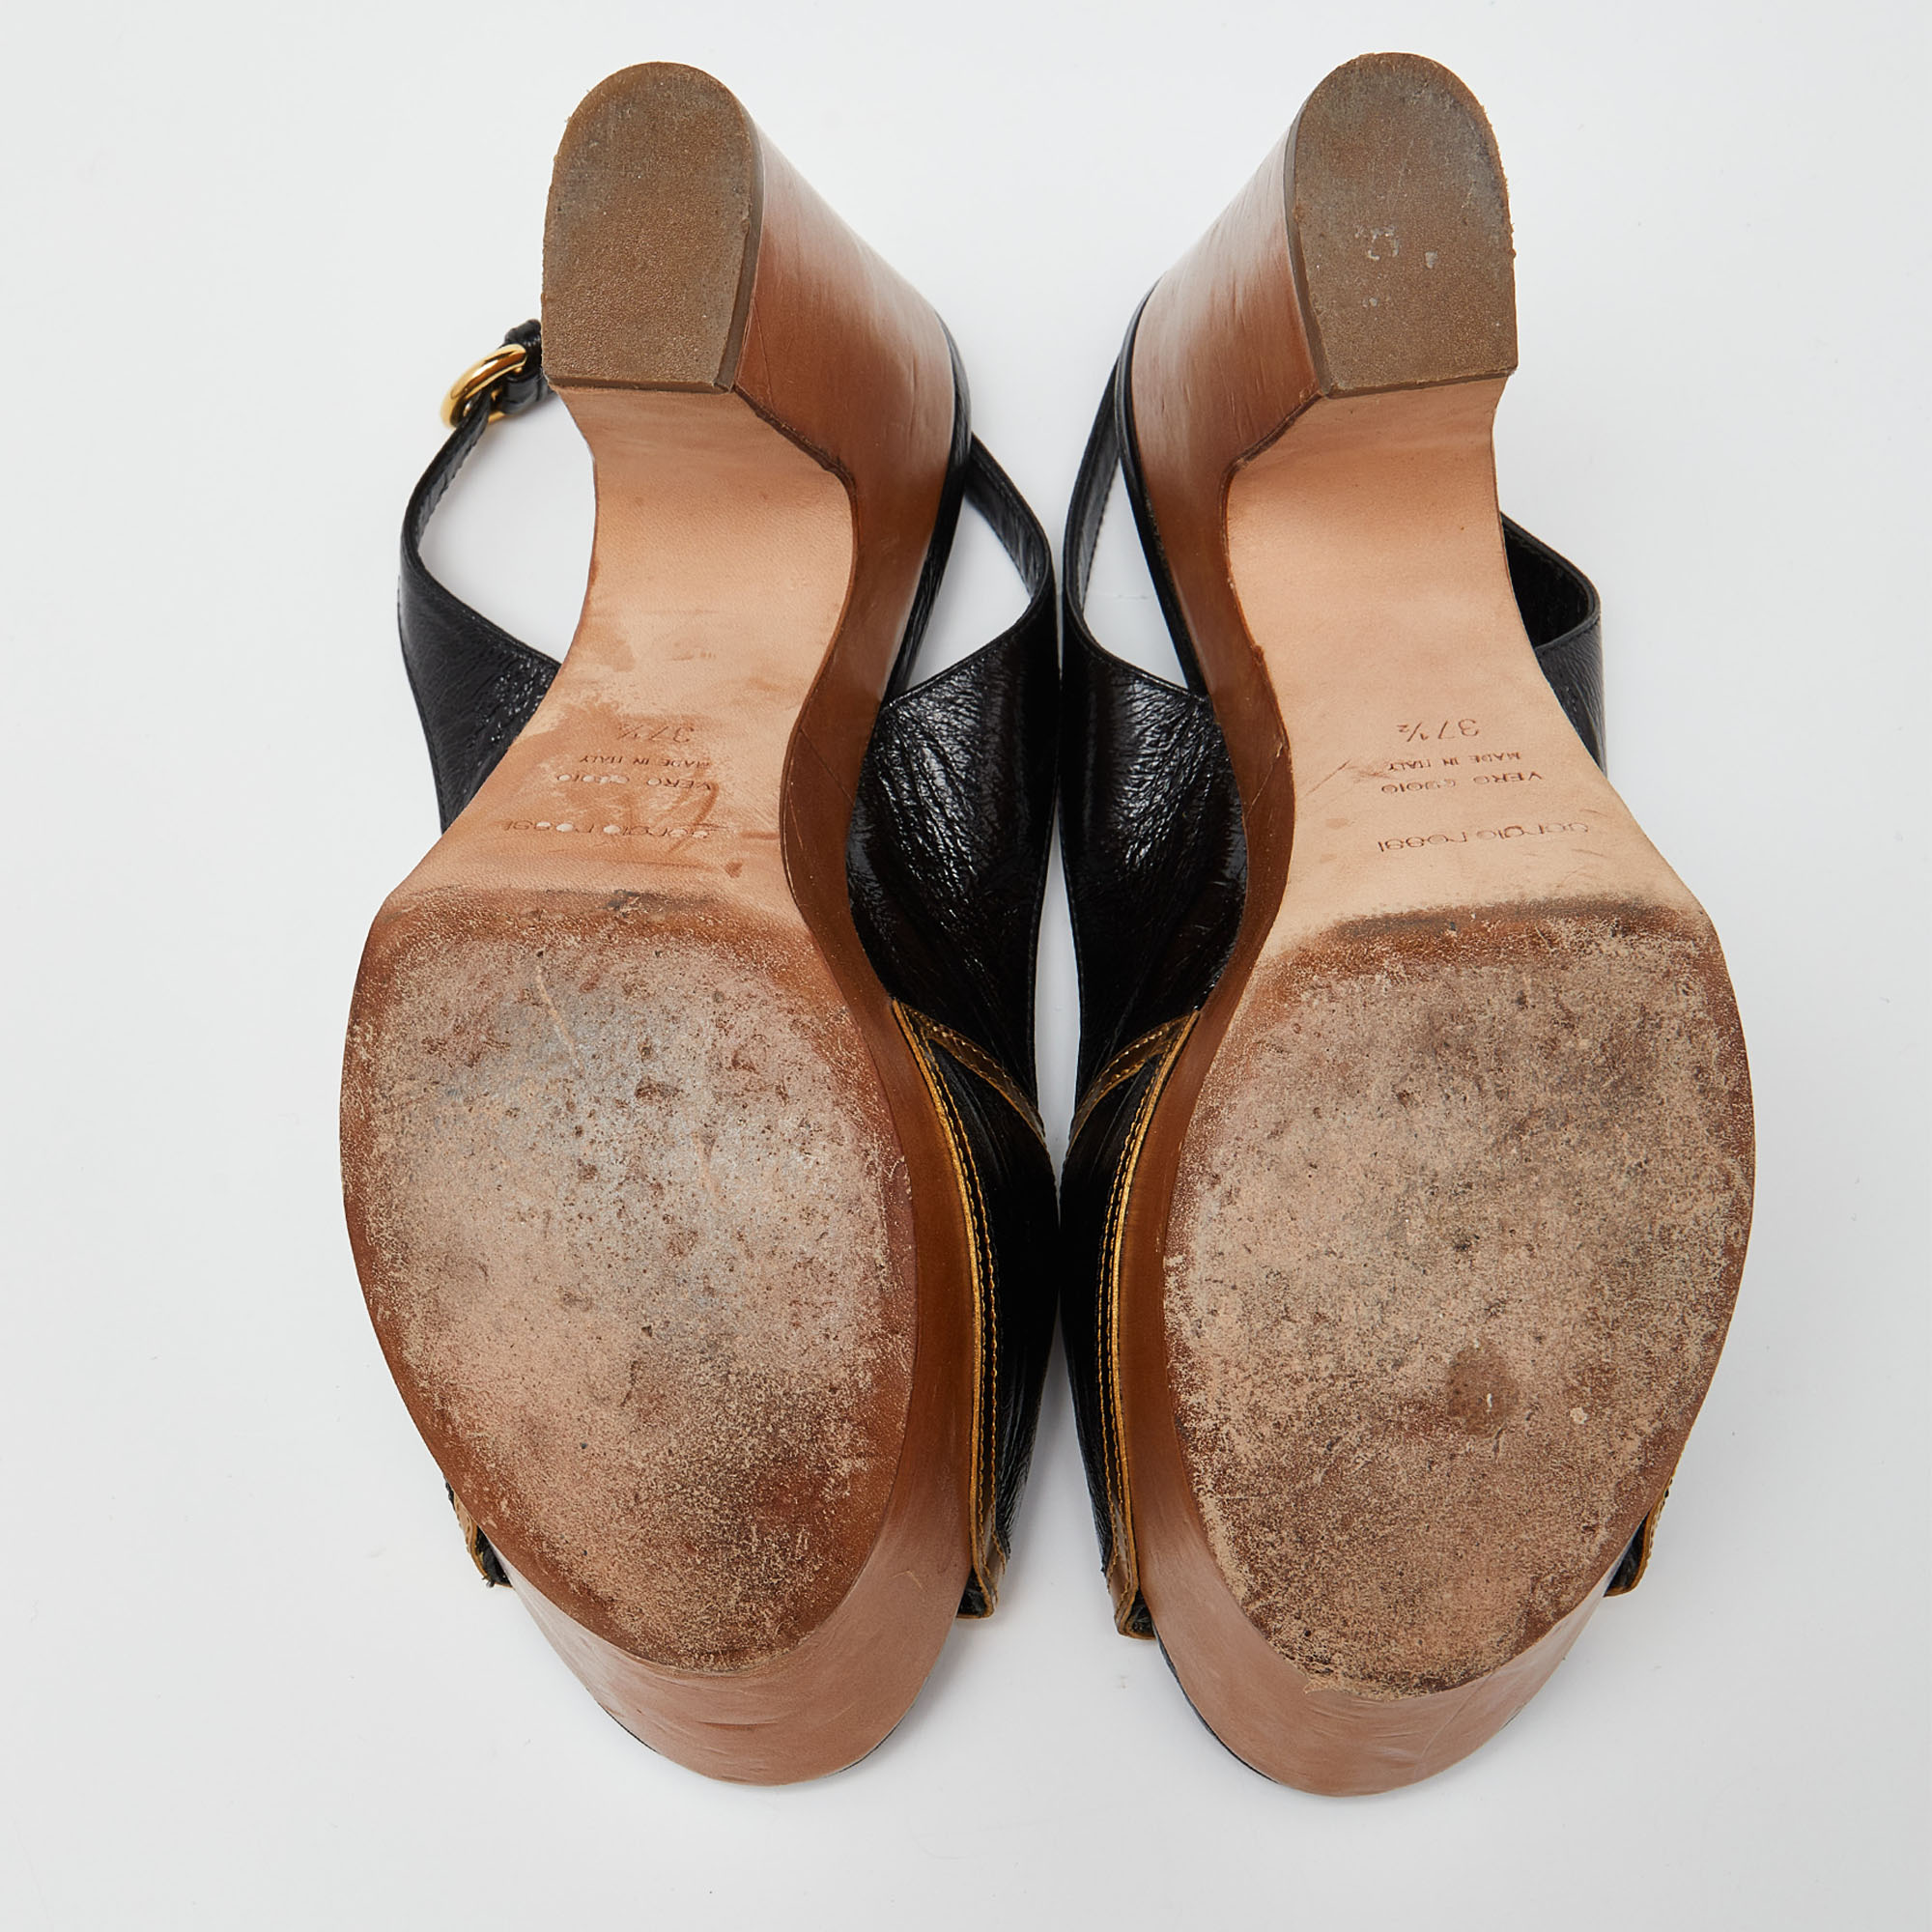 Sergio Rossi Black/Metallic Brown Leather Wooden Platform Open Toe Slingback Pumps Size 37.5